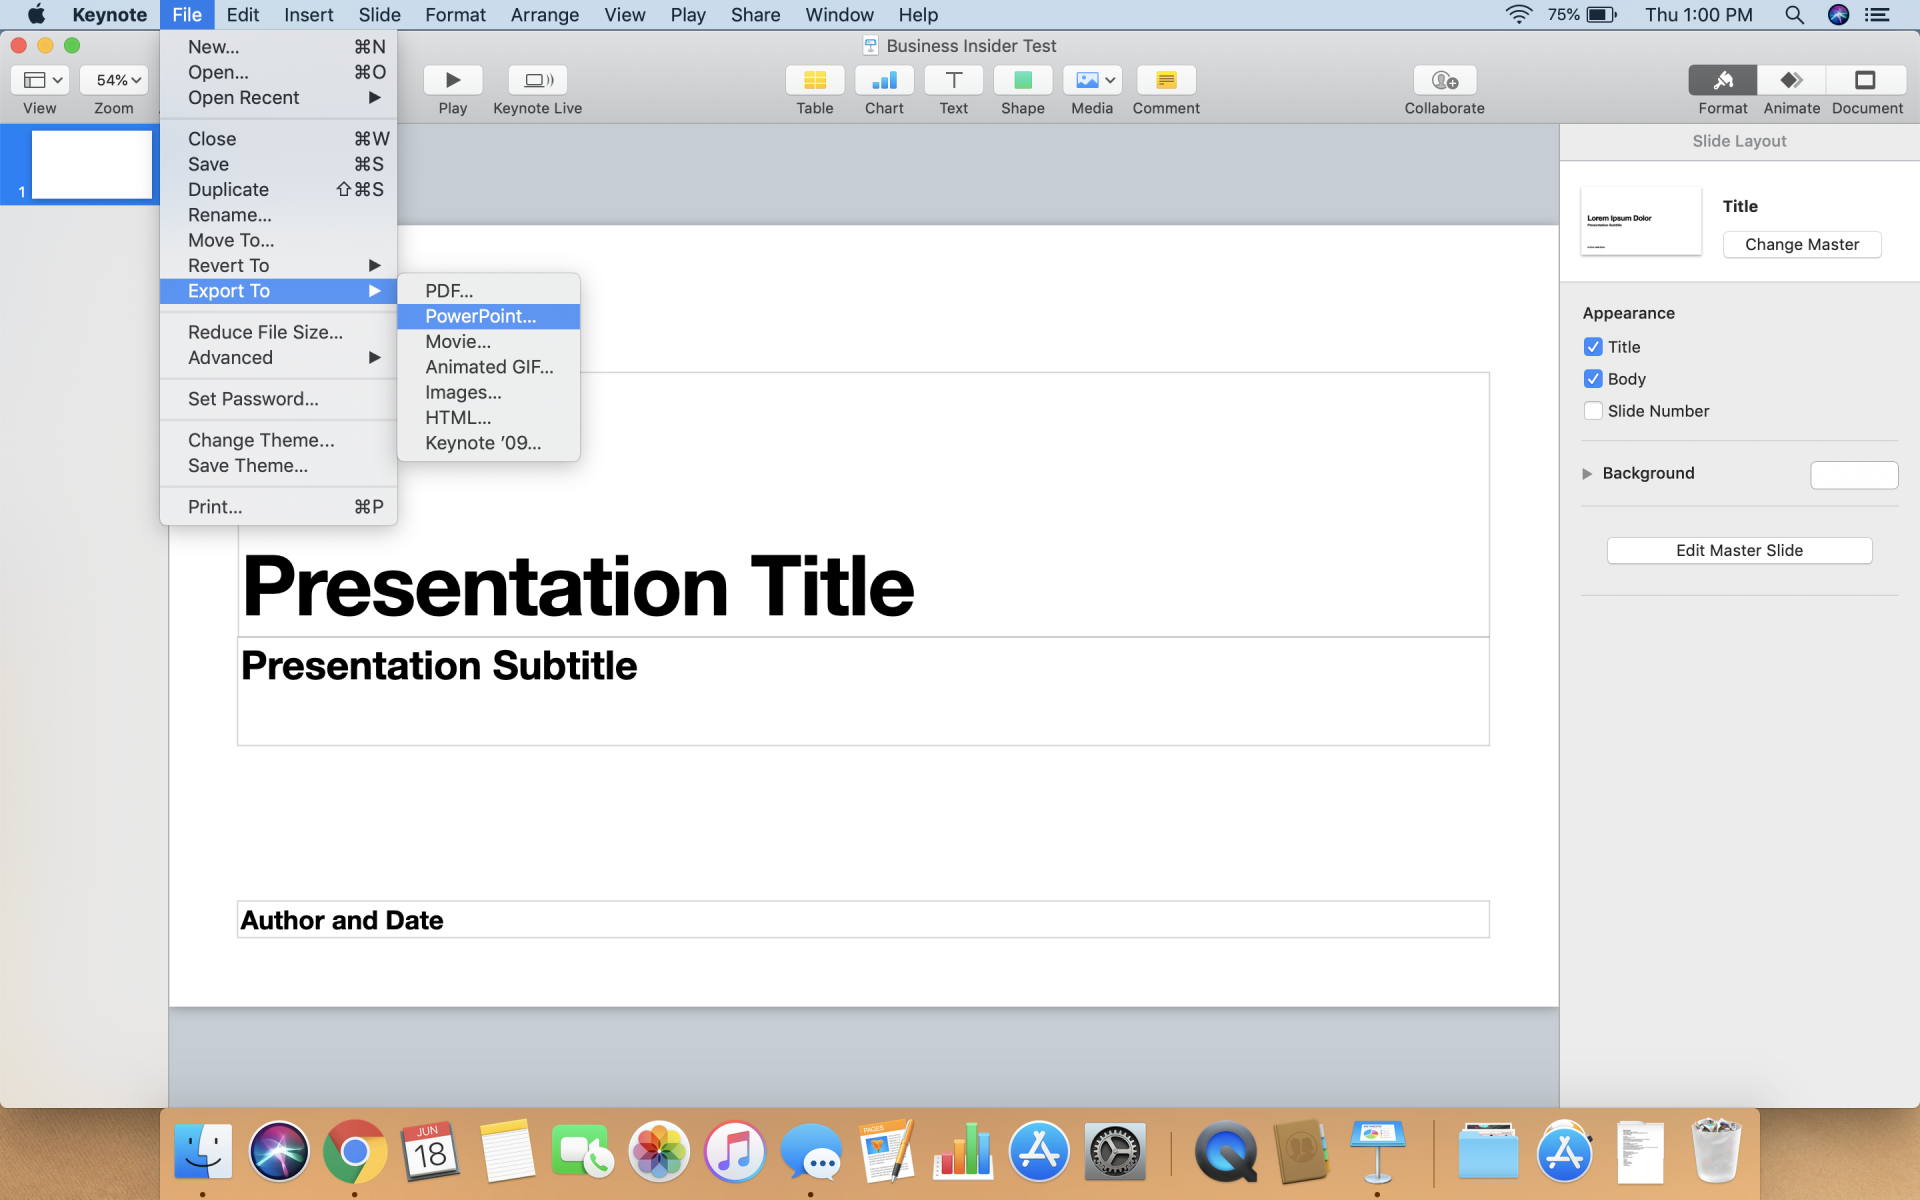 how to merge keynote presentations on ipad